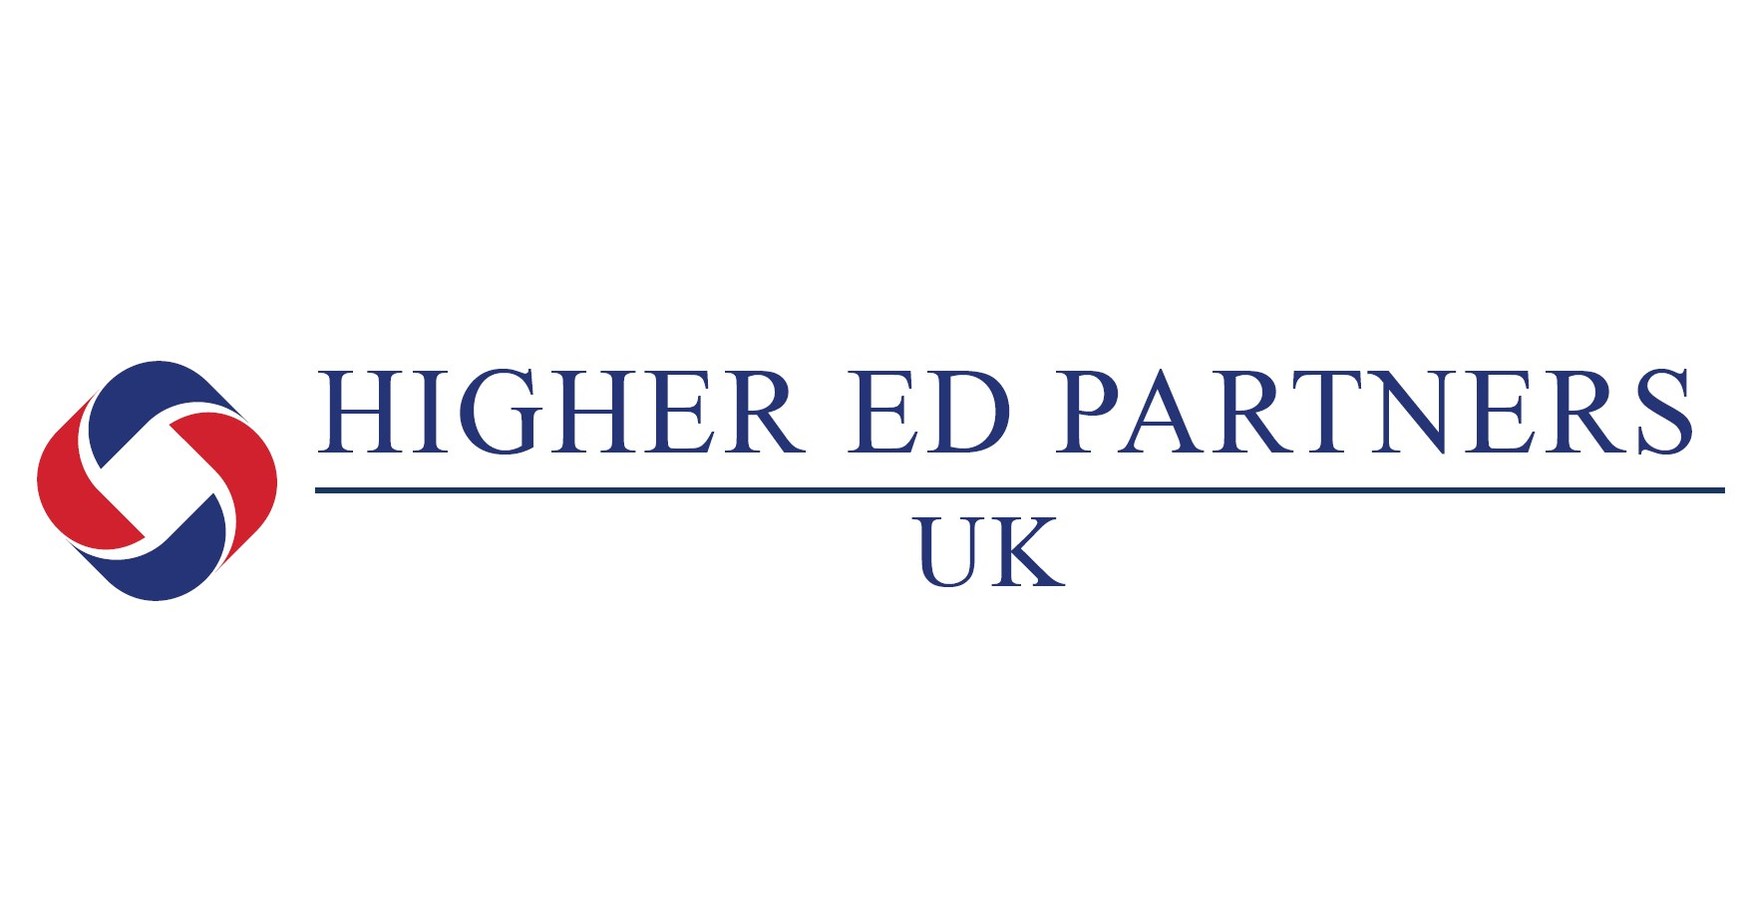 dD HIGHER ED PARTNERS
4 UK